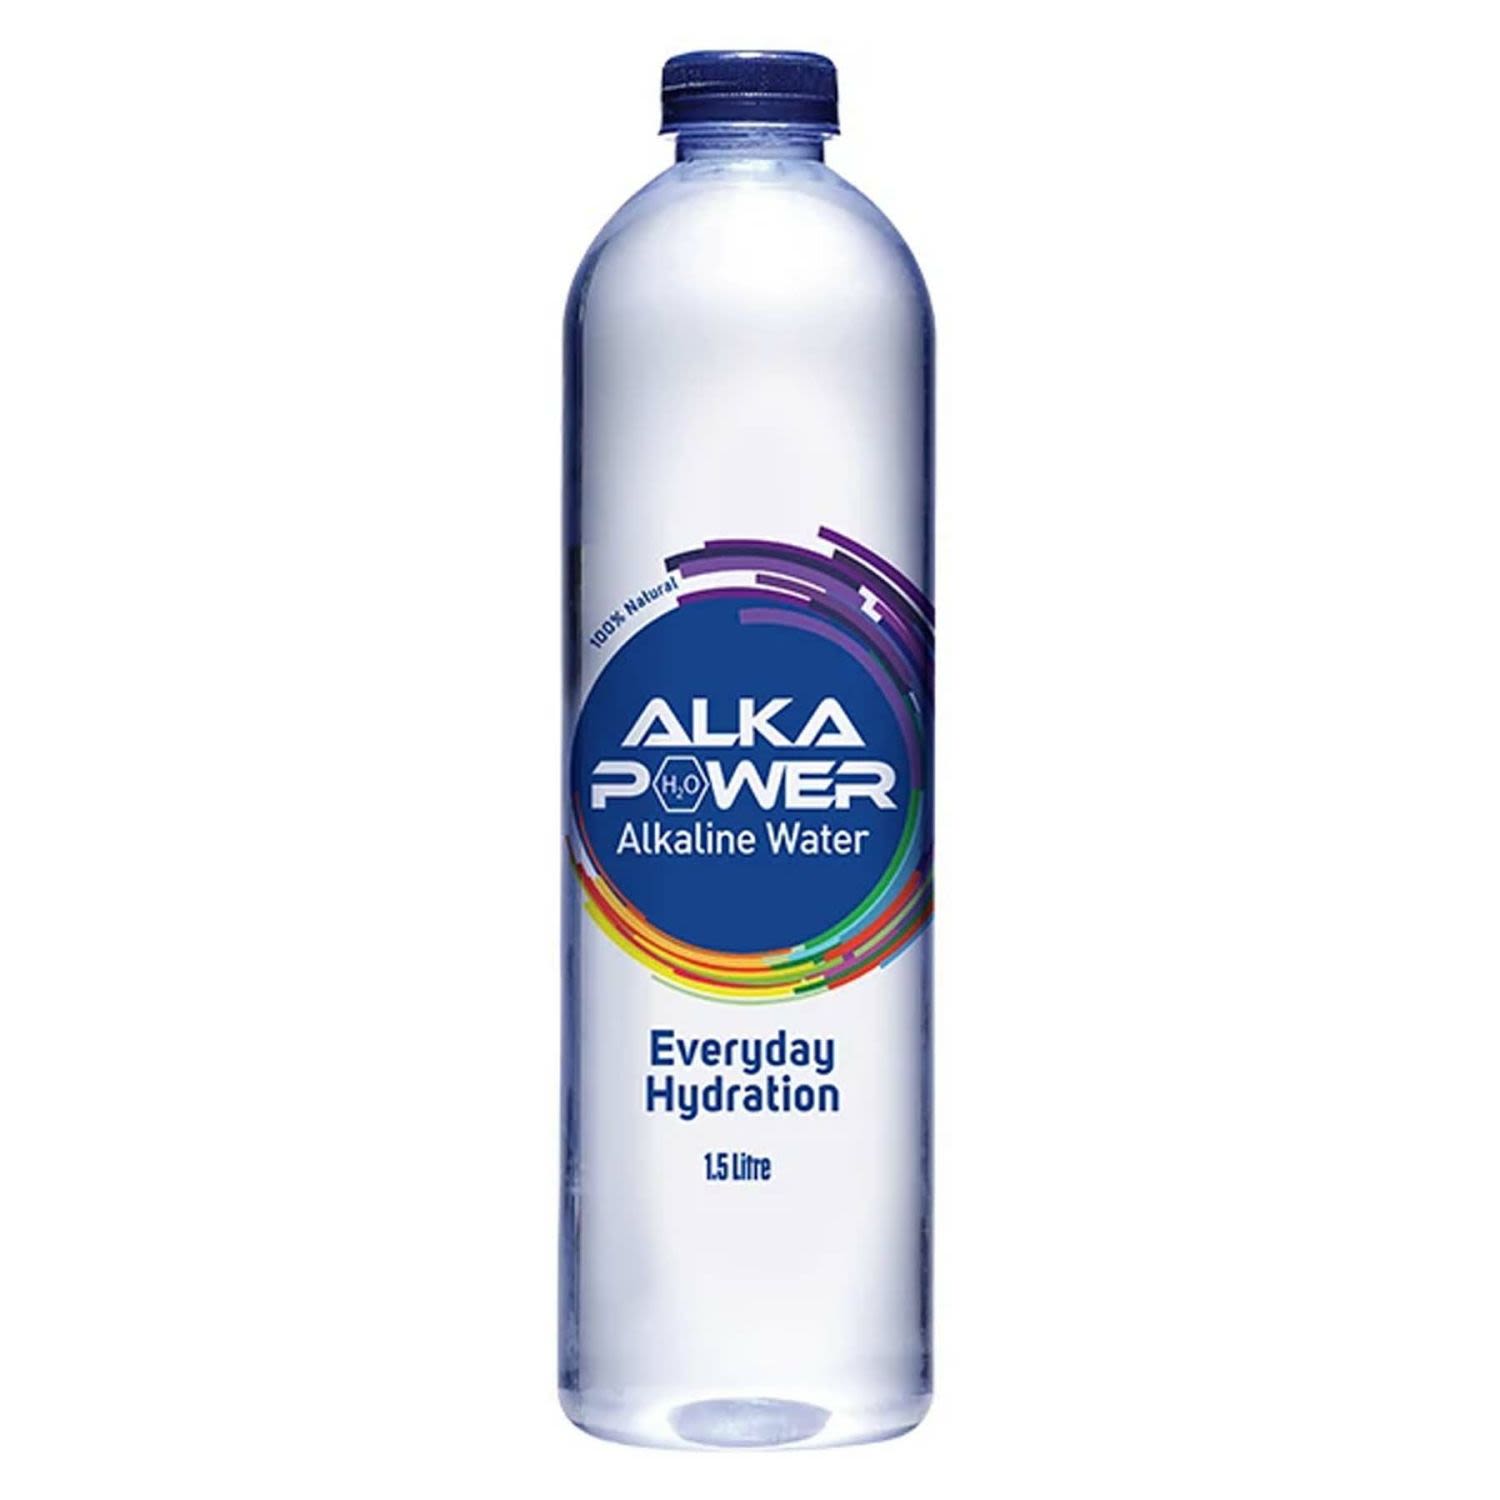 Alka Power Alkaline Water, 1.5 Litre